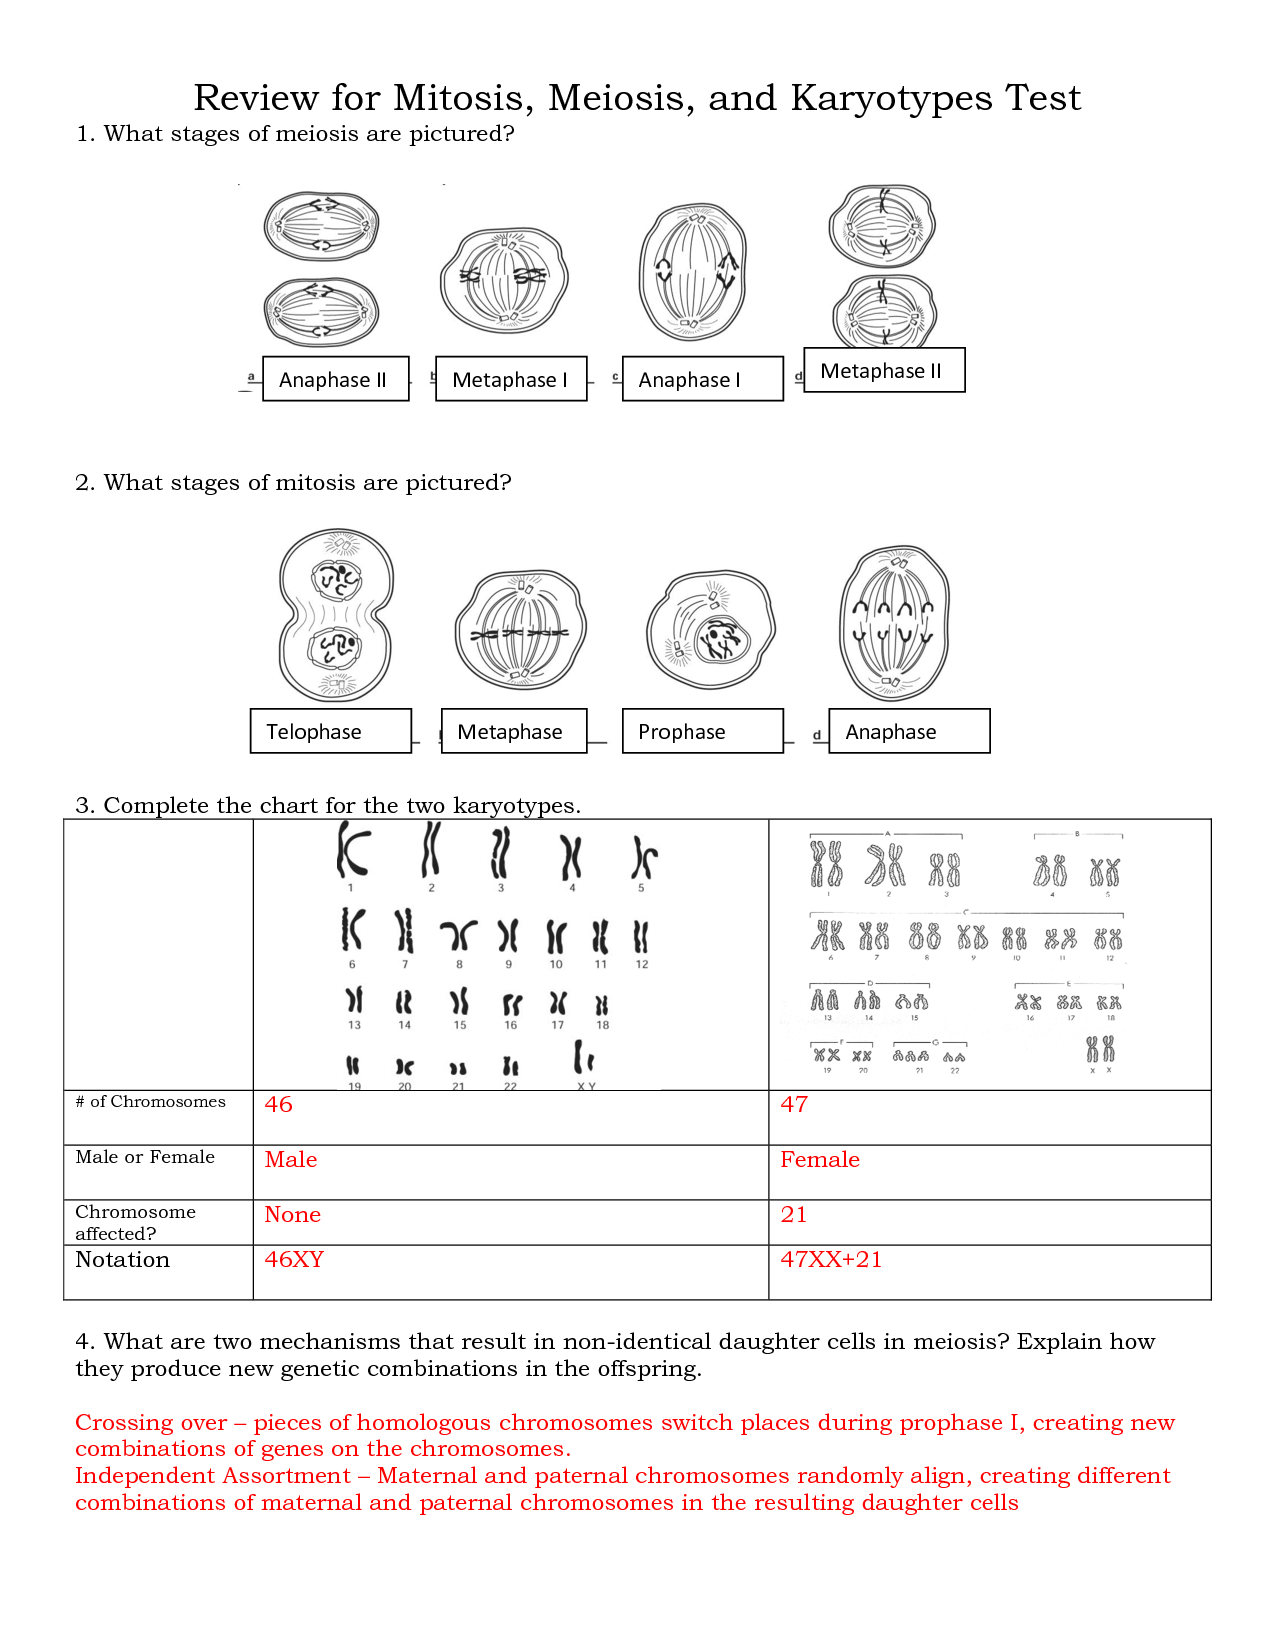 mitosis-vs-meiosis-chart-worksheet-answer-key